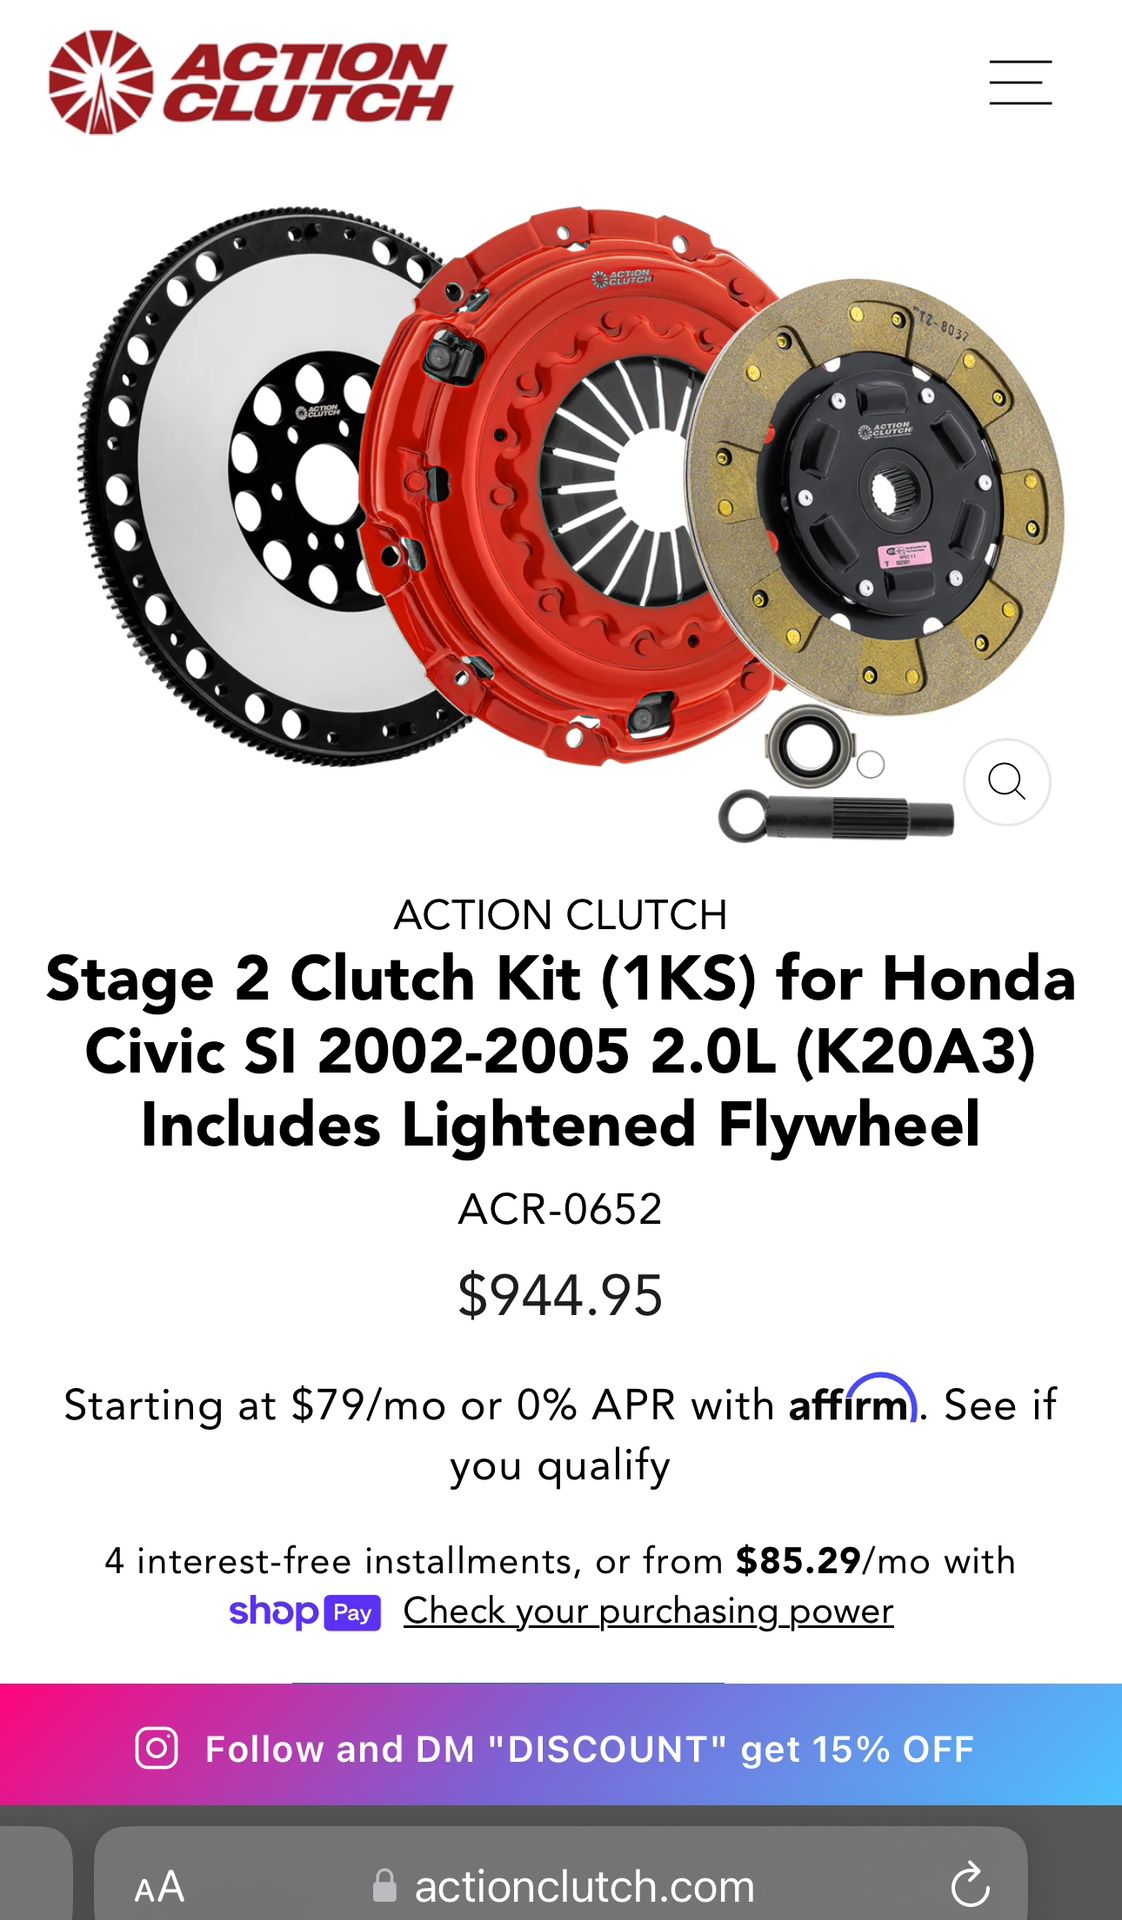 Stage 2 Clutch Kit for Honda K20